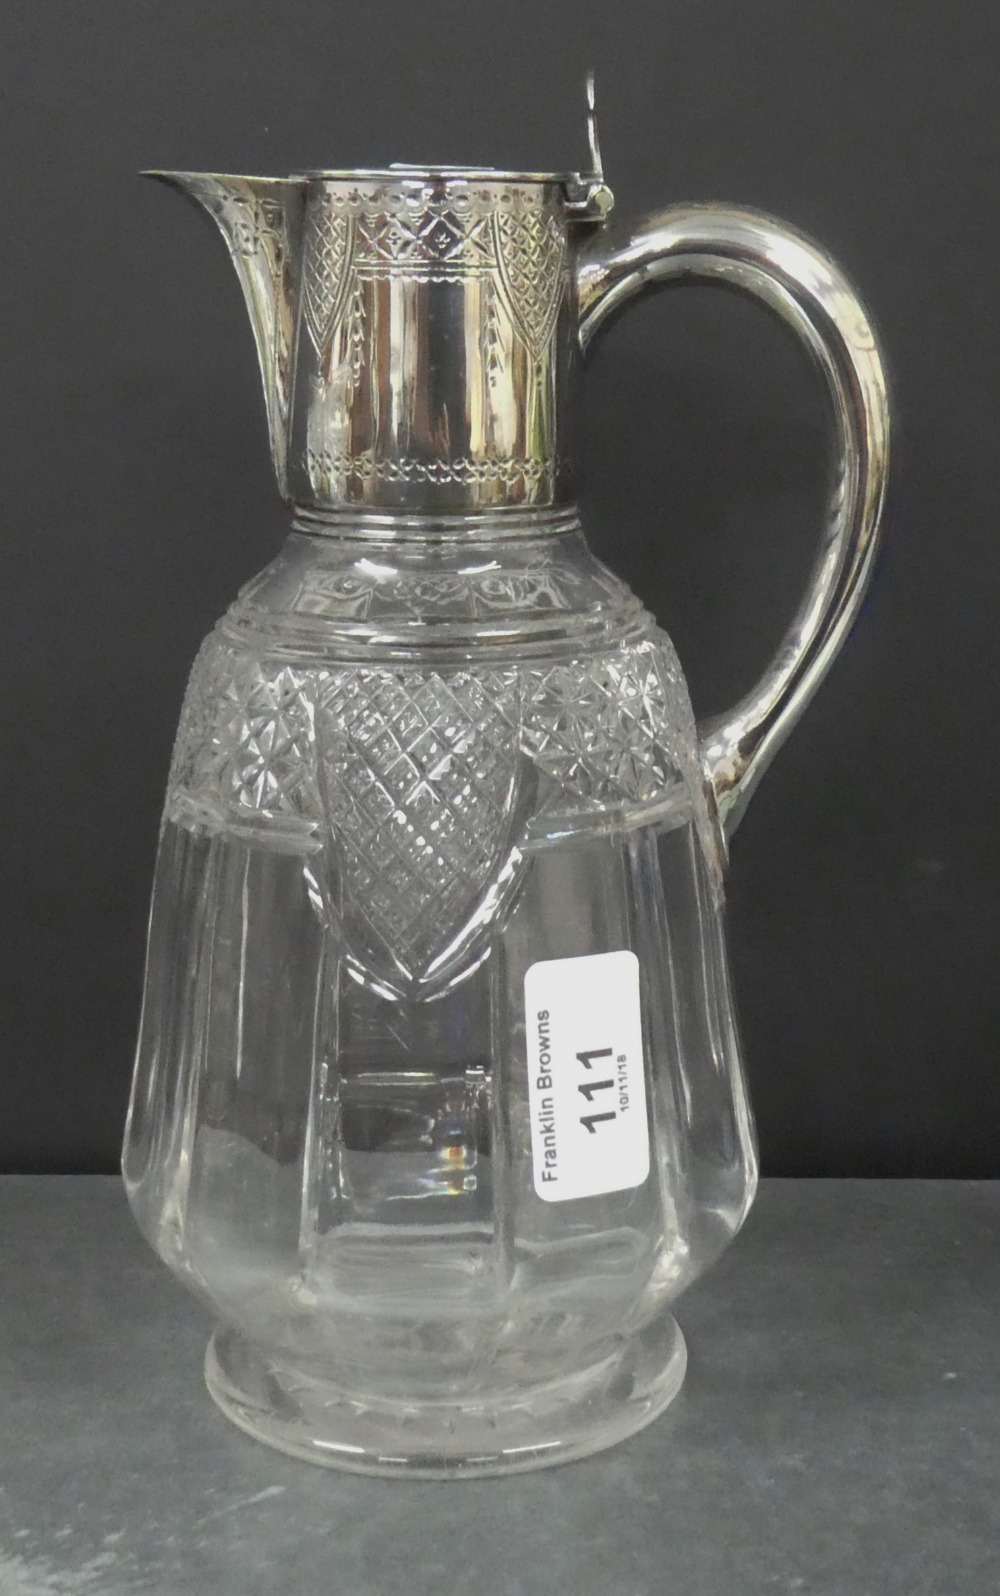 Epns and cut glass claret jug, 22cm high